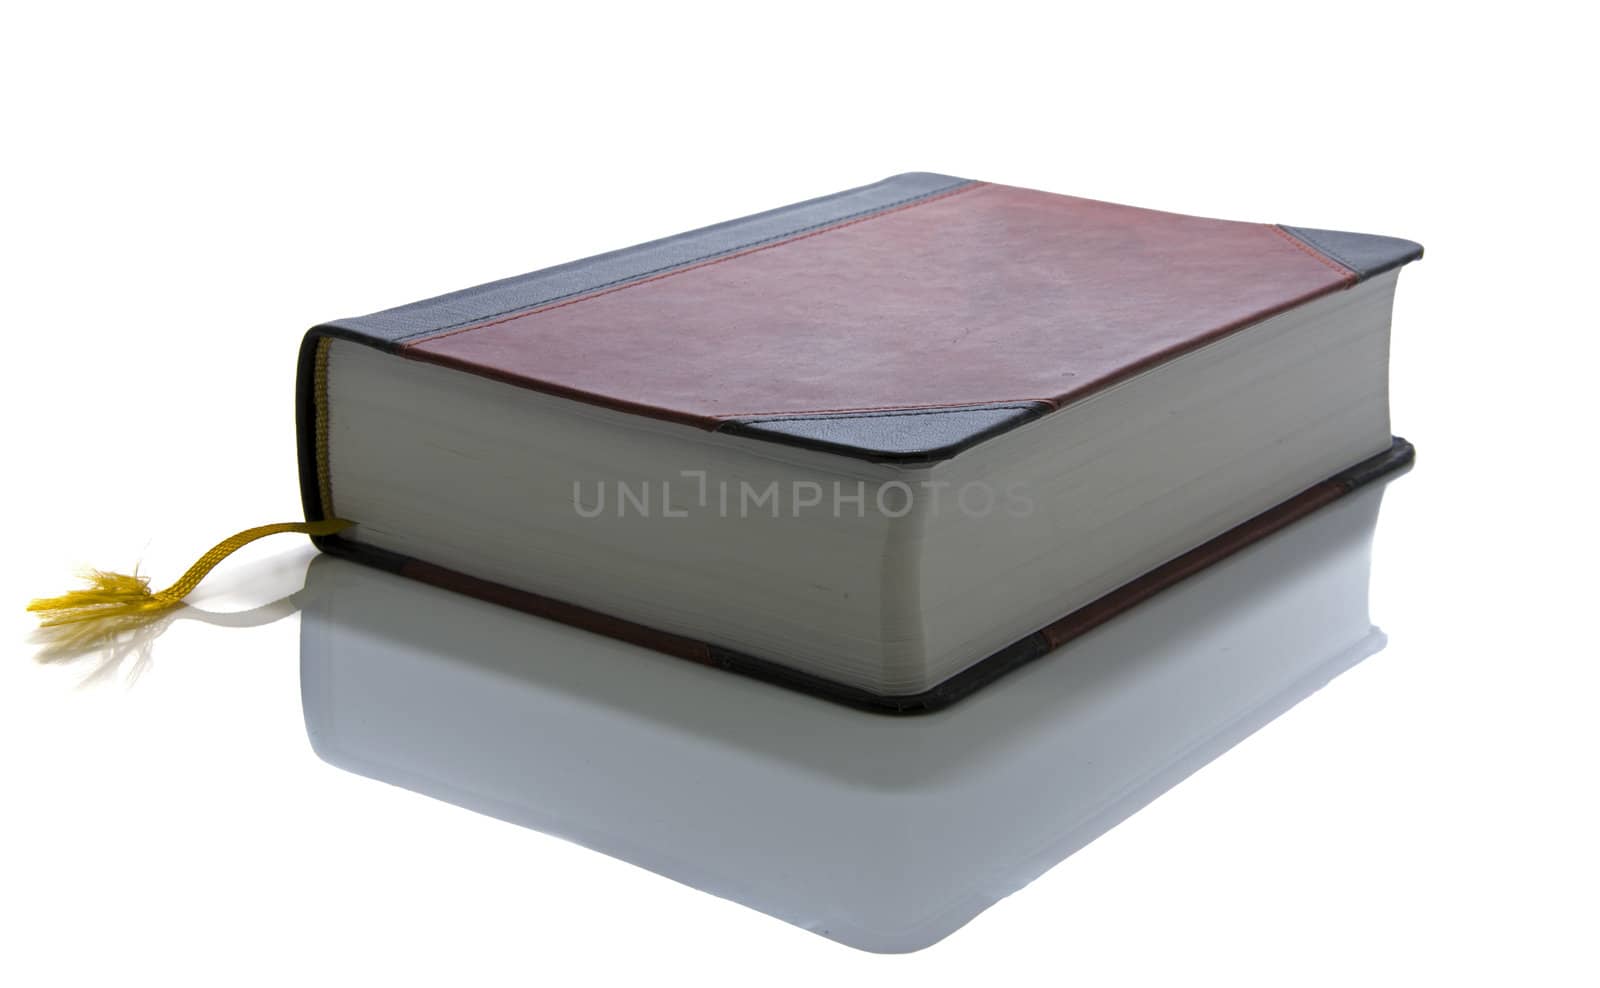 dutch bible book  by compuinfoto